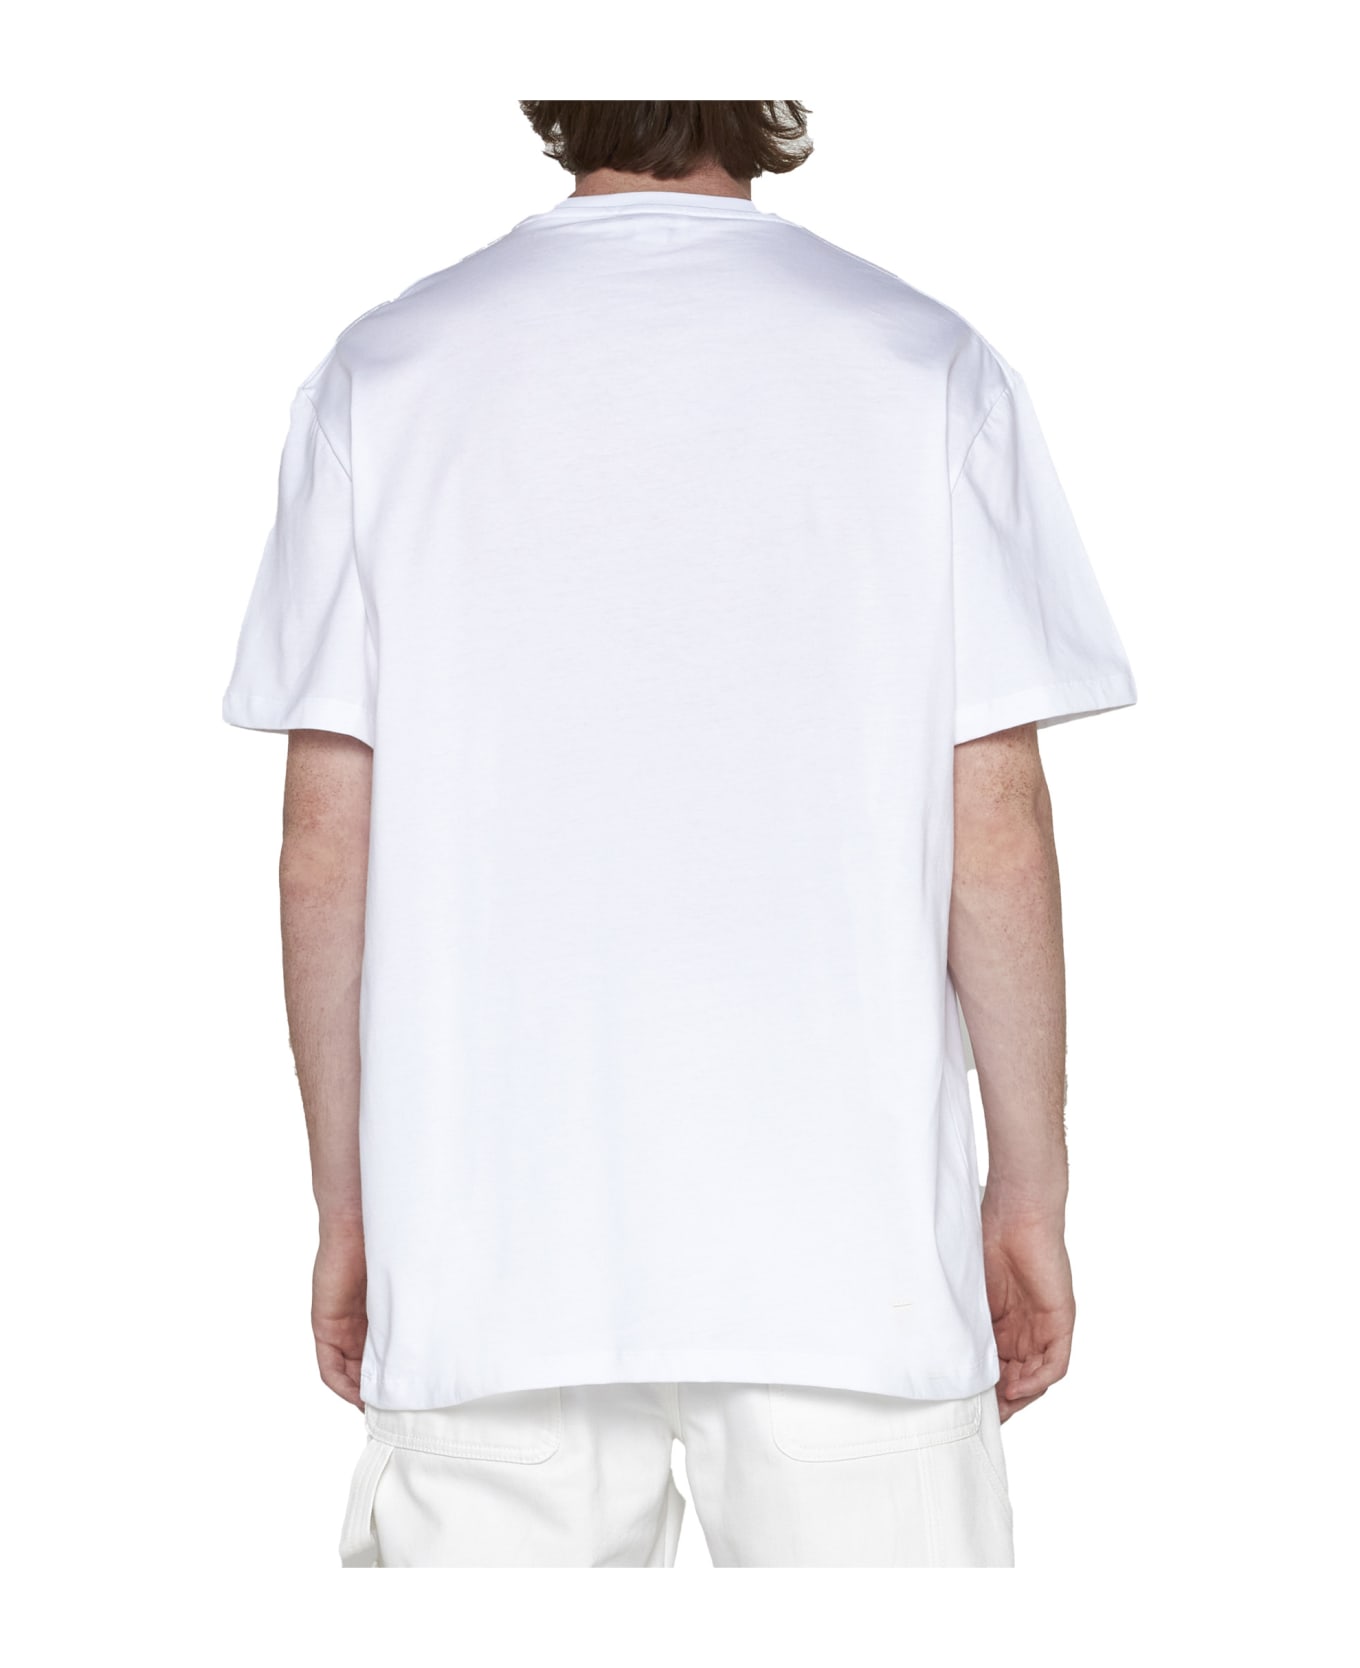 Alexander McQueen Crewneck T-shirt With Logo Tape - White Mix